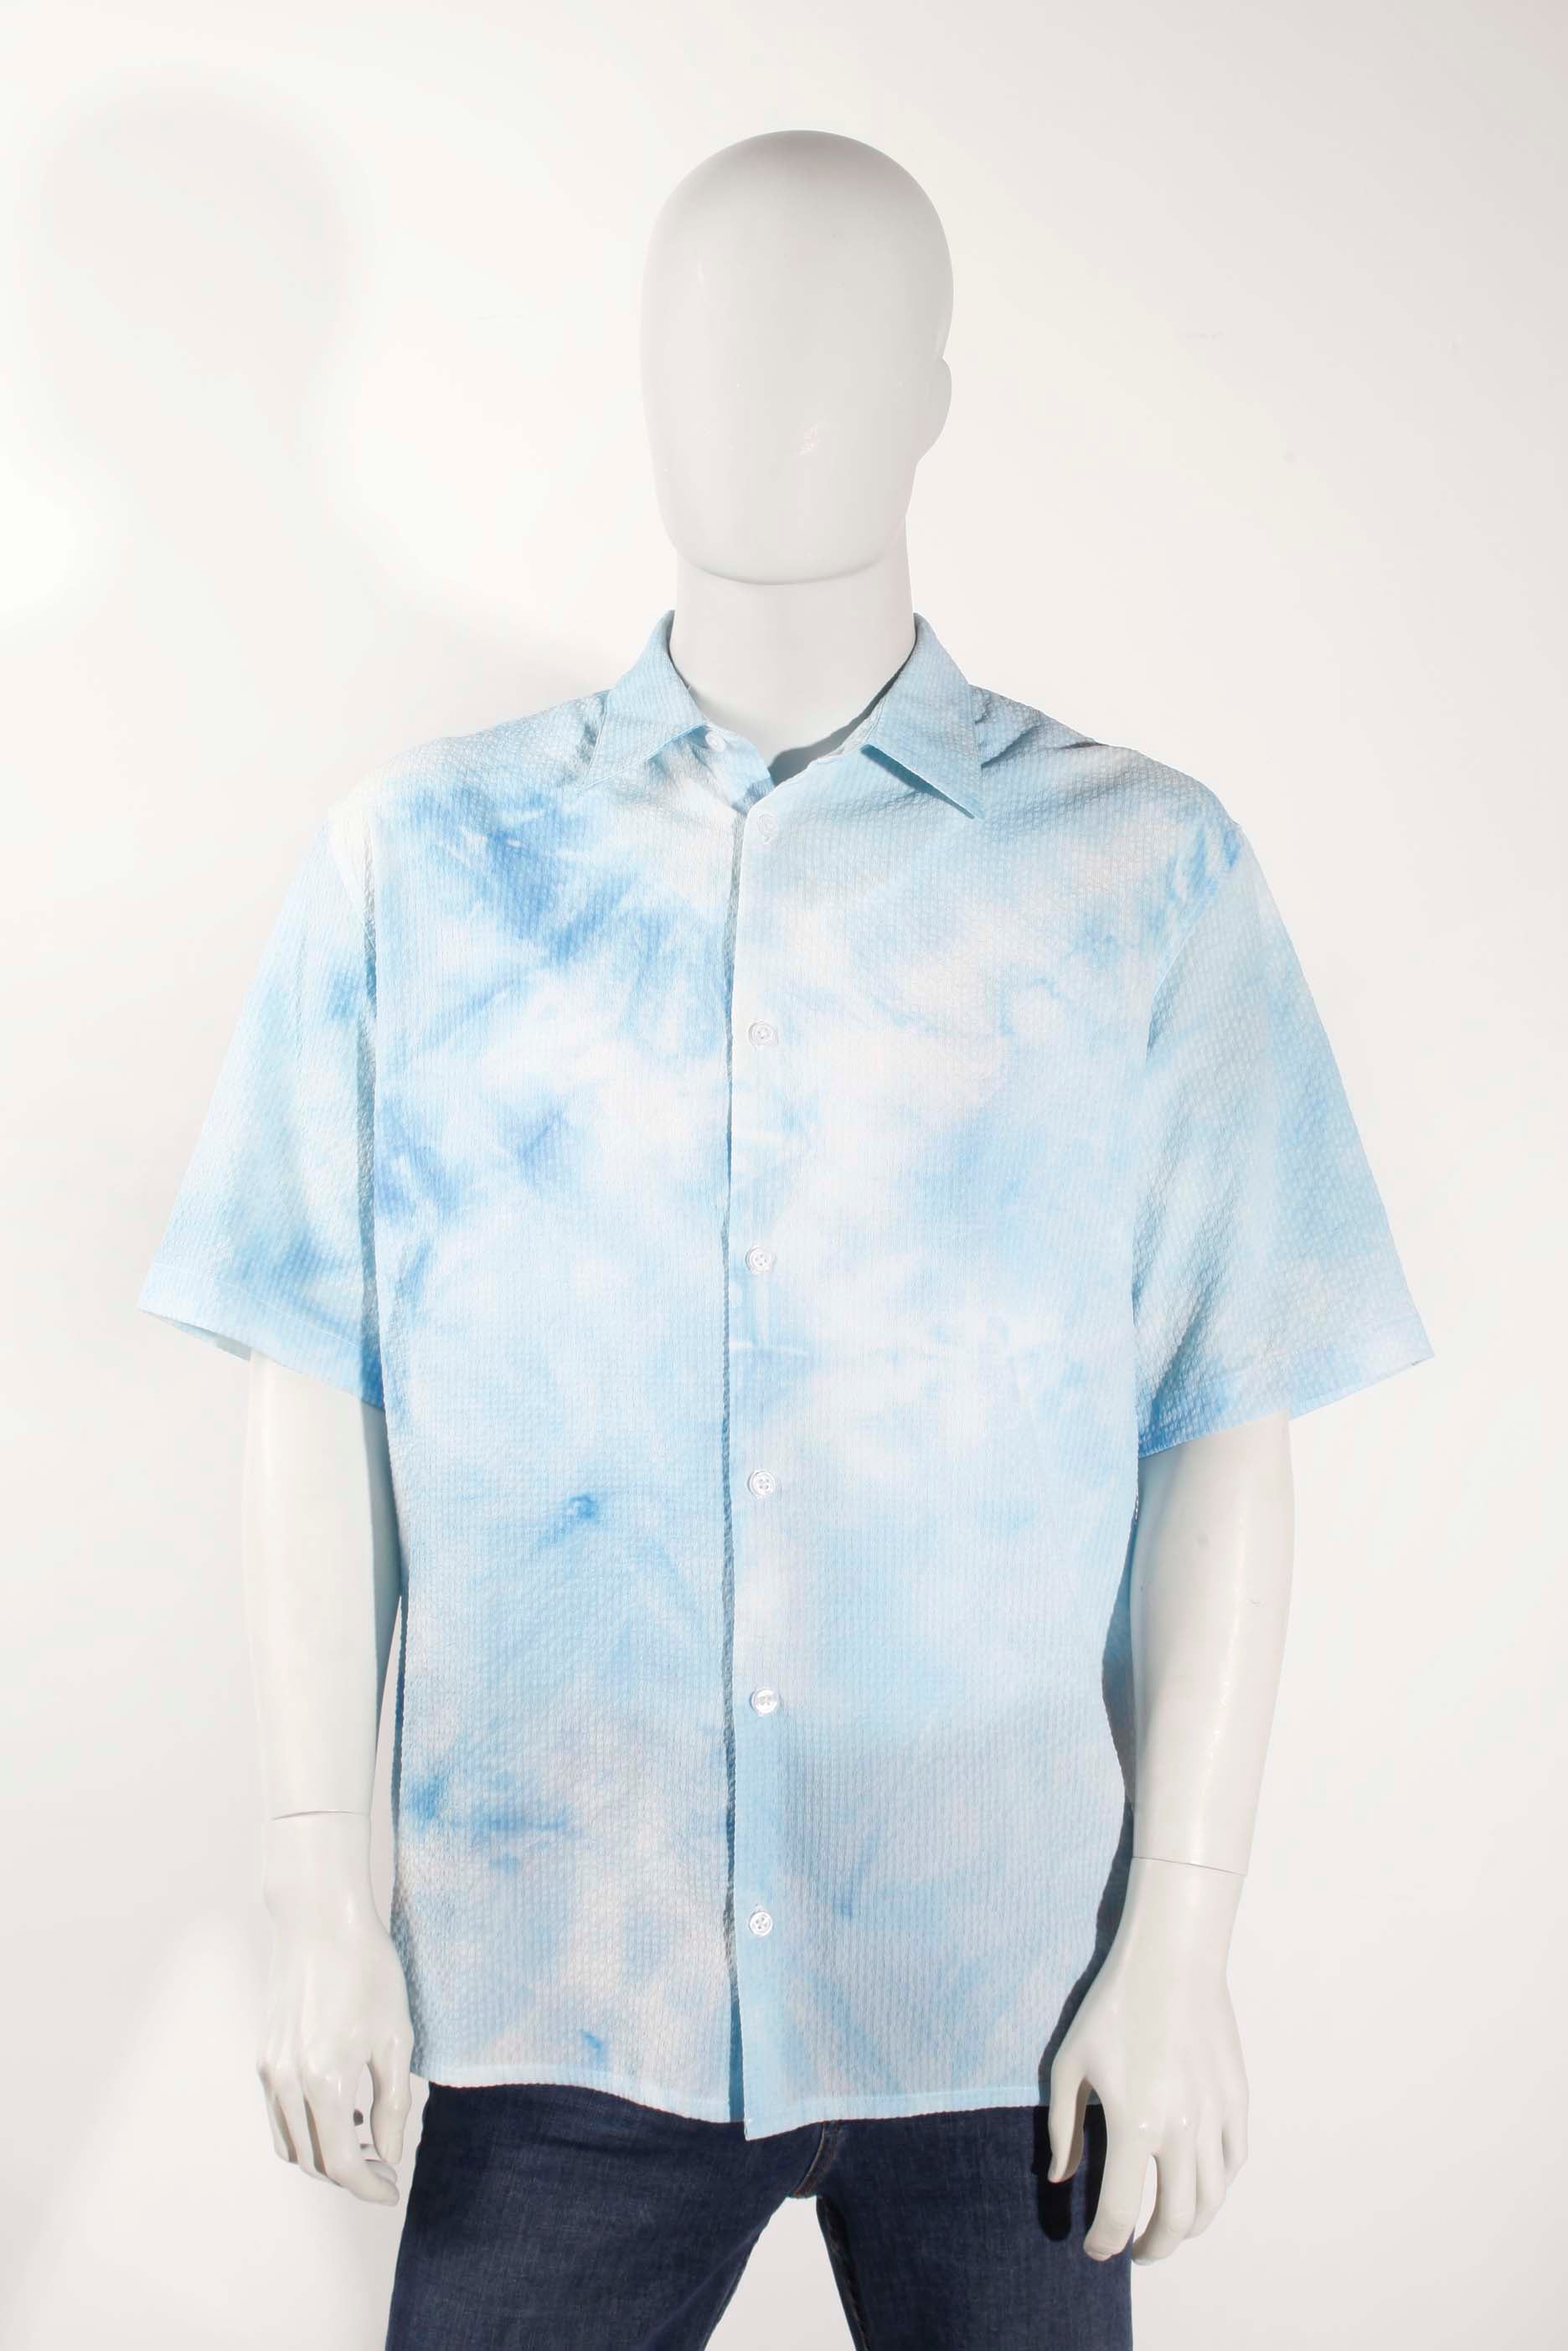 Tie Dye Blue Shirt (Medium)